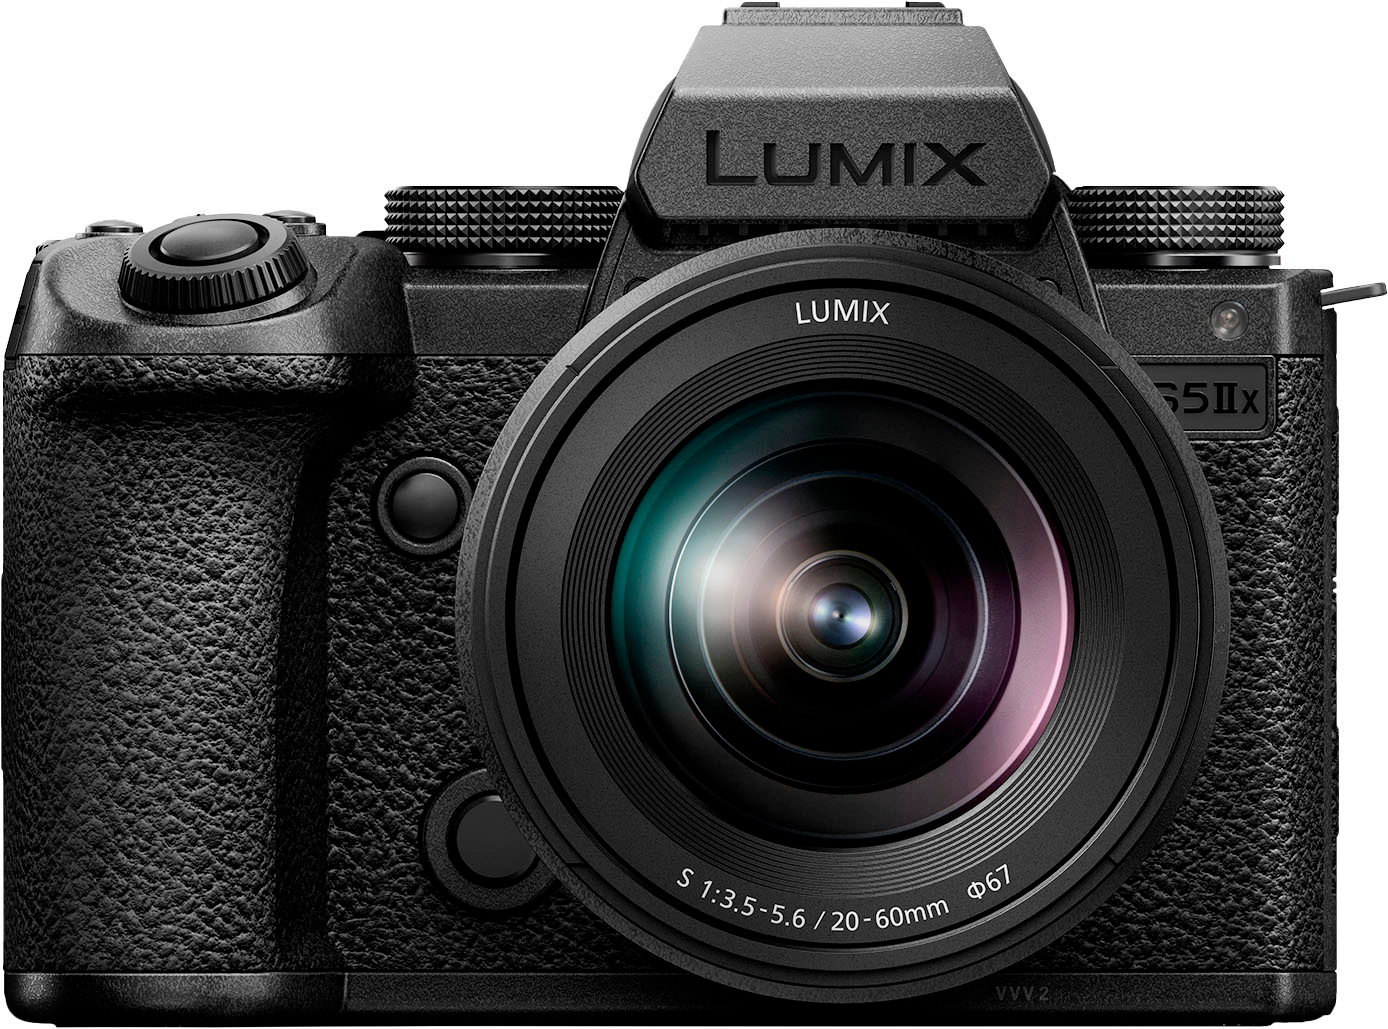 Panasonic Announces Updates to LUMIX S5II and S5IIX Cameras